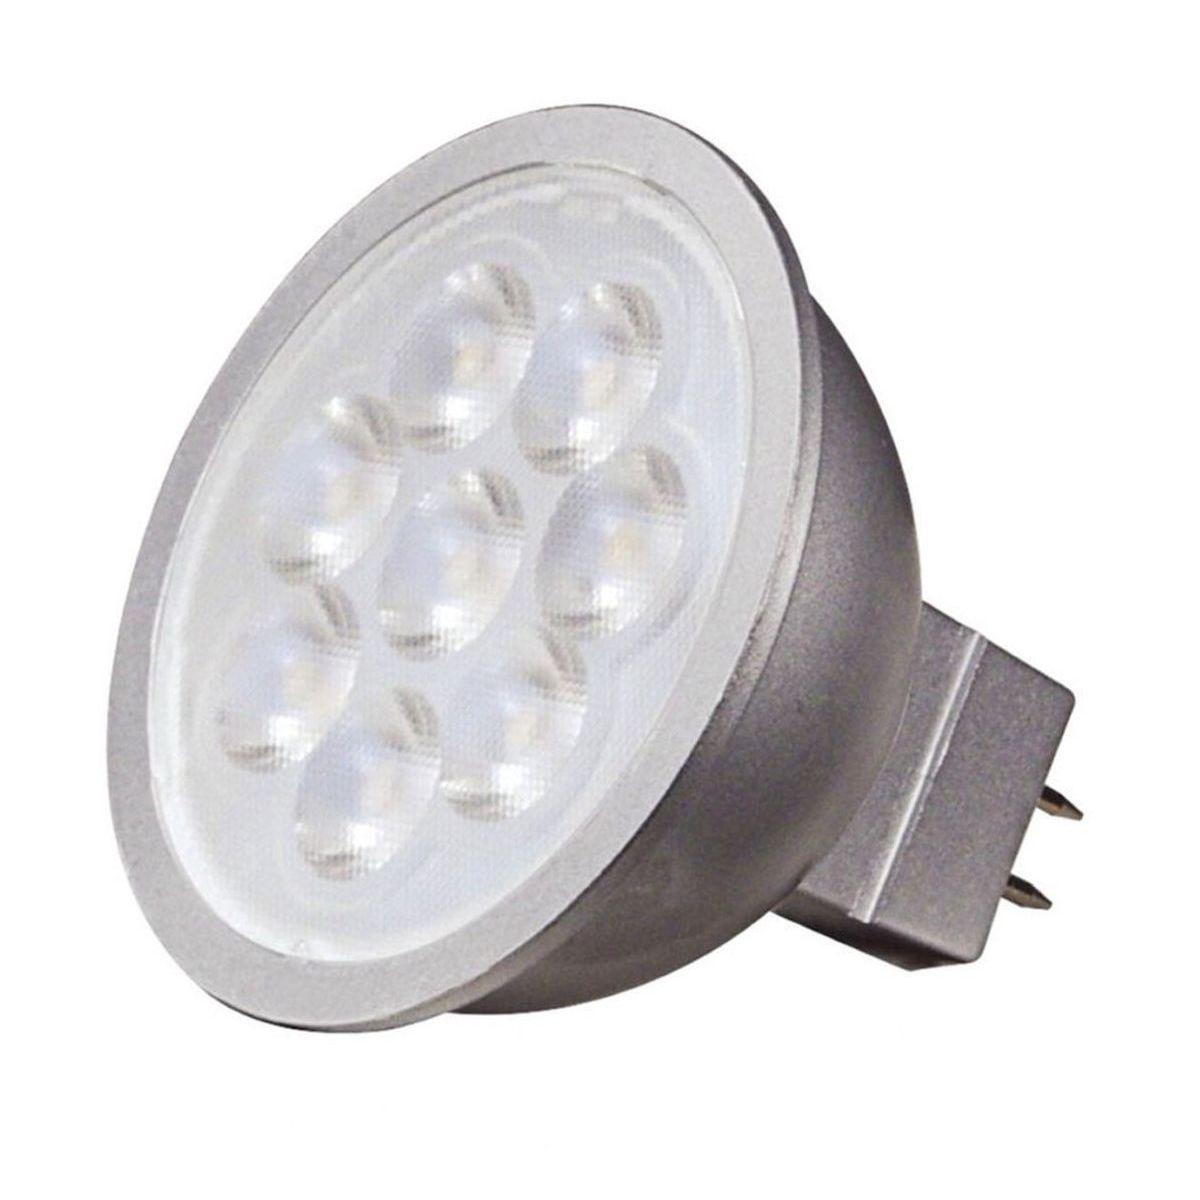 MR16 Reflector LED bulb, 6 watt, 450 Lumens, 3000K, GU5.3 Base, 40 Deg. Flood